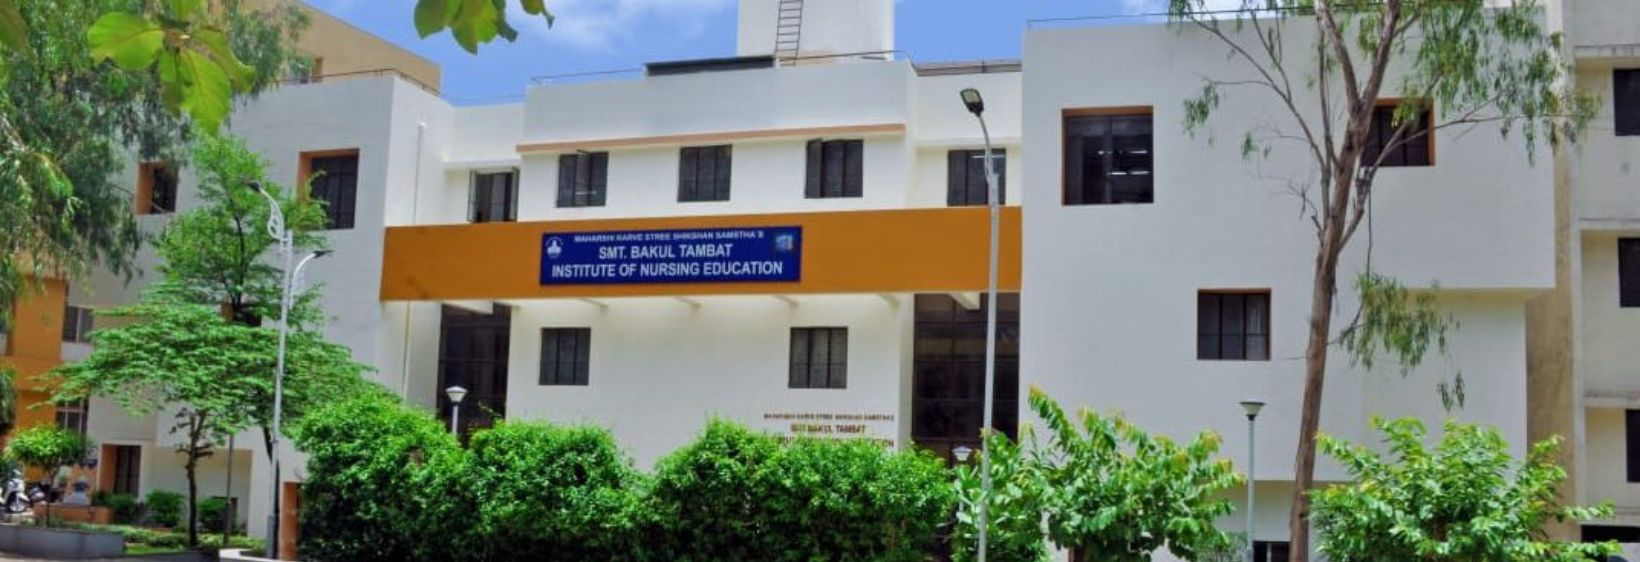 Smt. Bakul Tambat Institute of Nursing Education - Pune